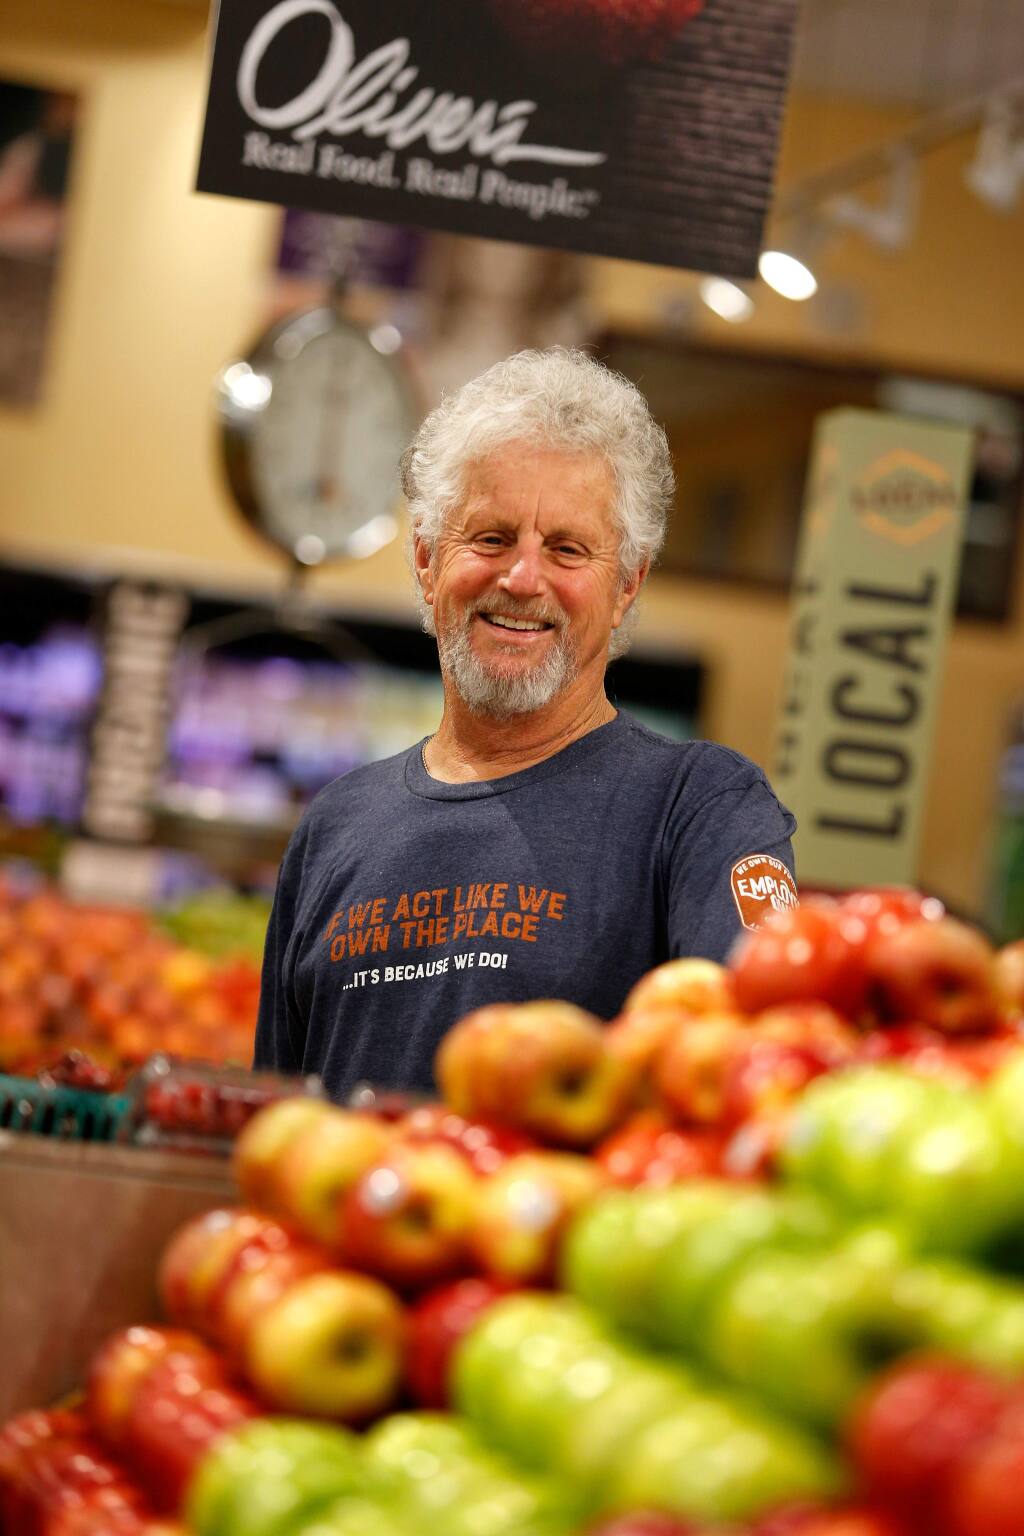 Oliver's Market founder Steve Maass at Oliver's Market in Cotati, California, on Tuesday, June 6, 2017. (Alvin Jornada / The Press Democrat)